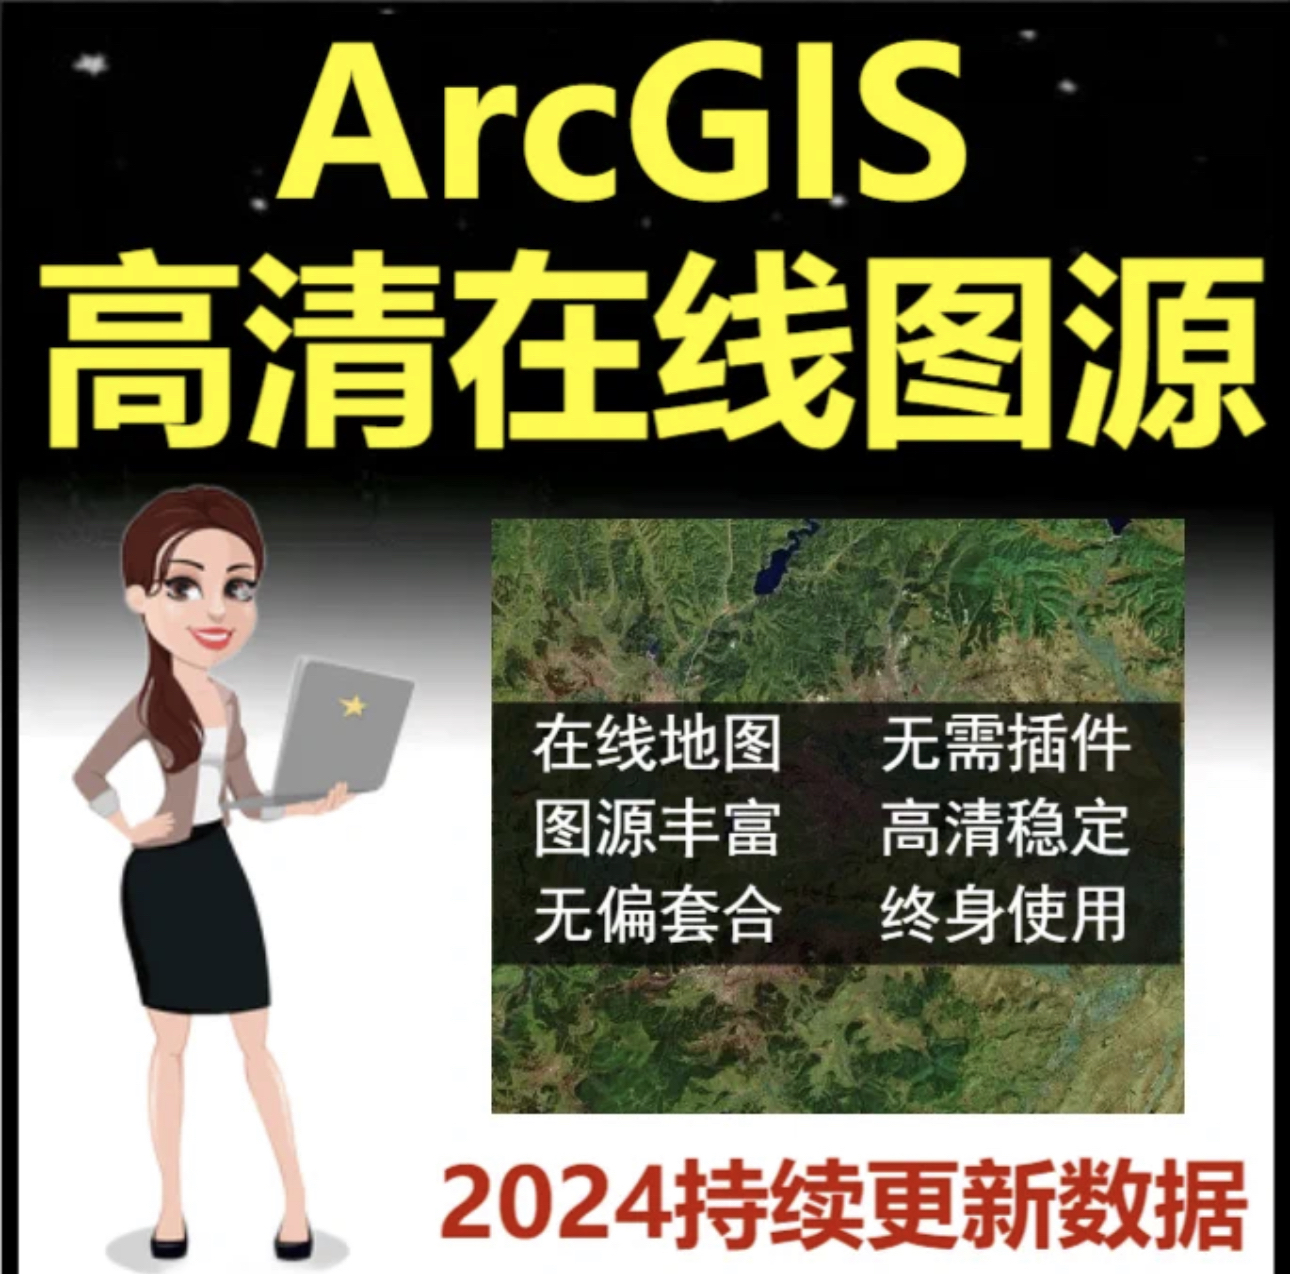 ArcGIS高清在线图源 天地图高清影像 卫星图 瓦片底图 背景图